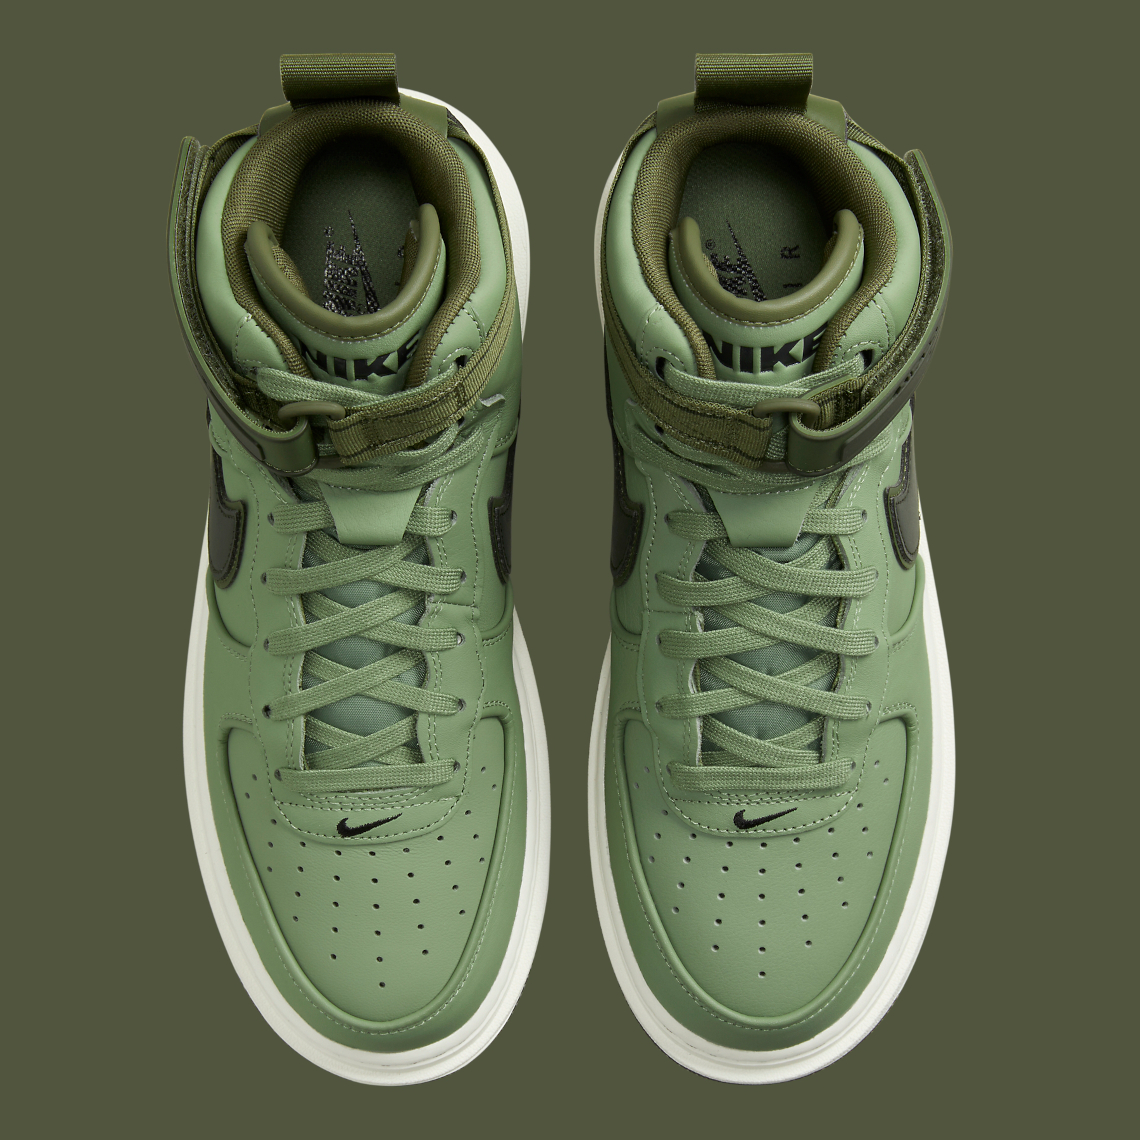 Nike Air Force stockx 1 High Boot Green DA0418 300 8